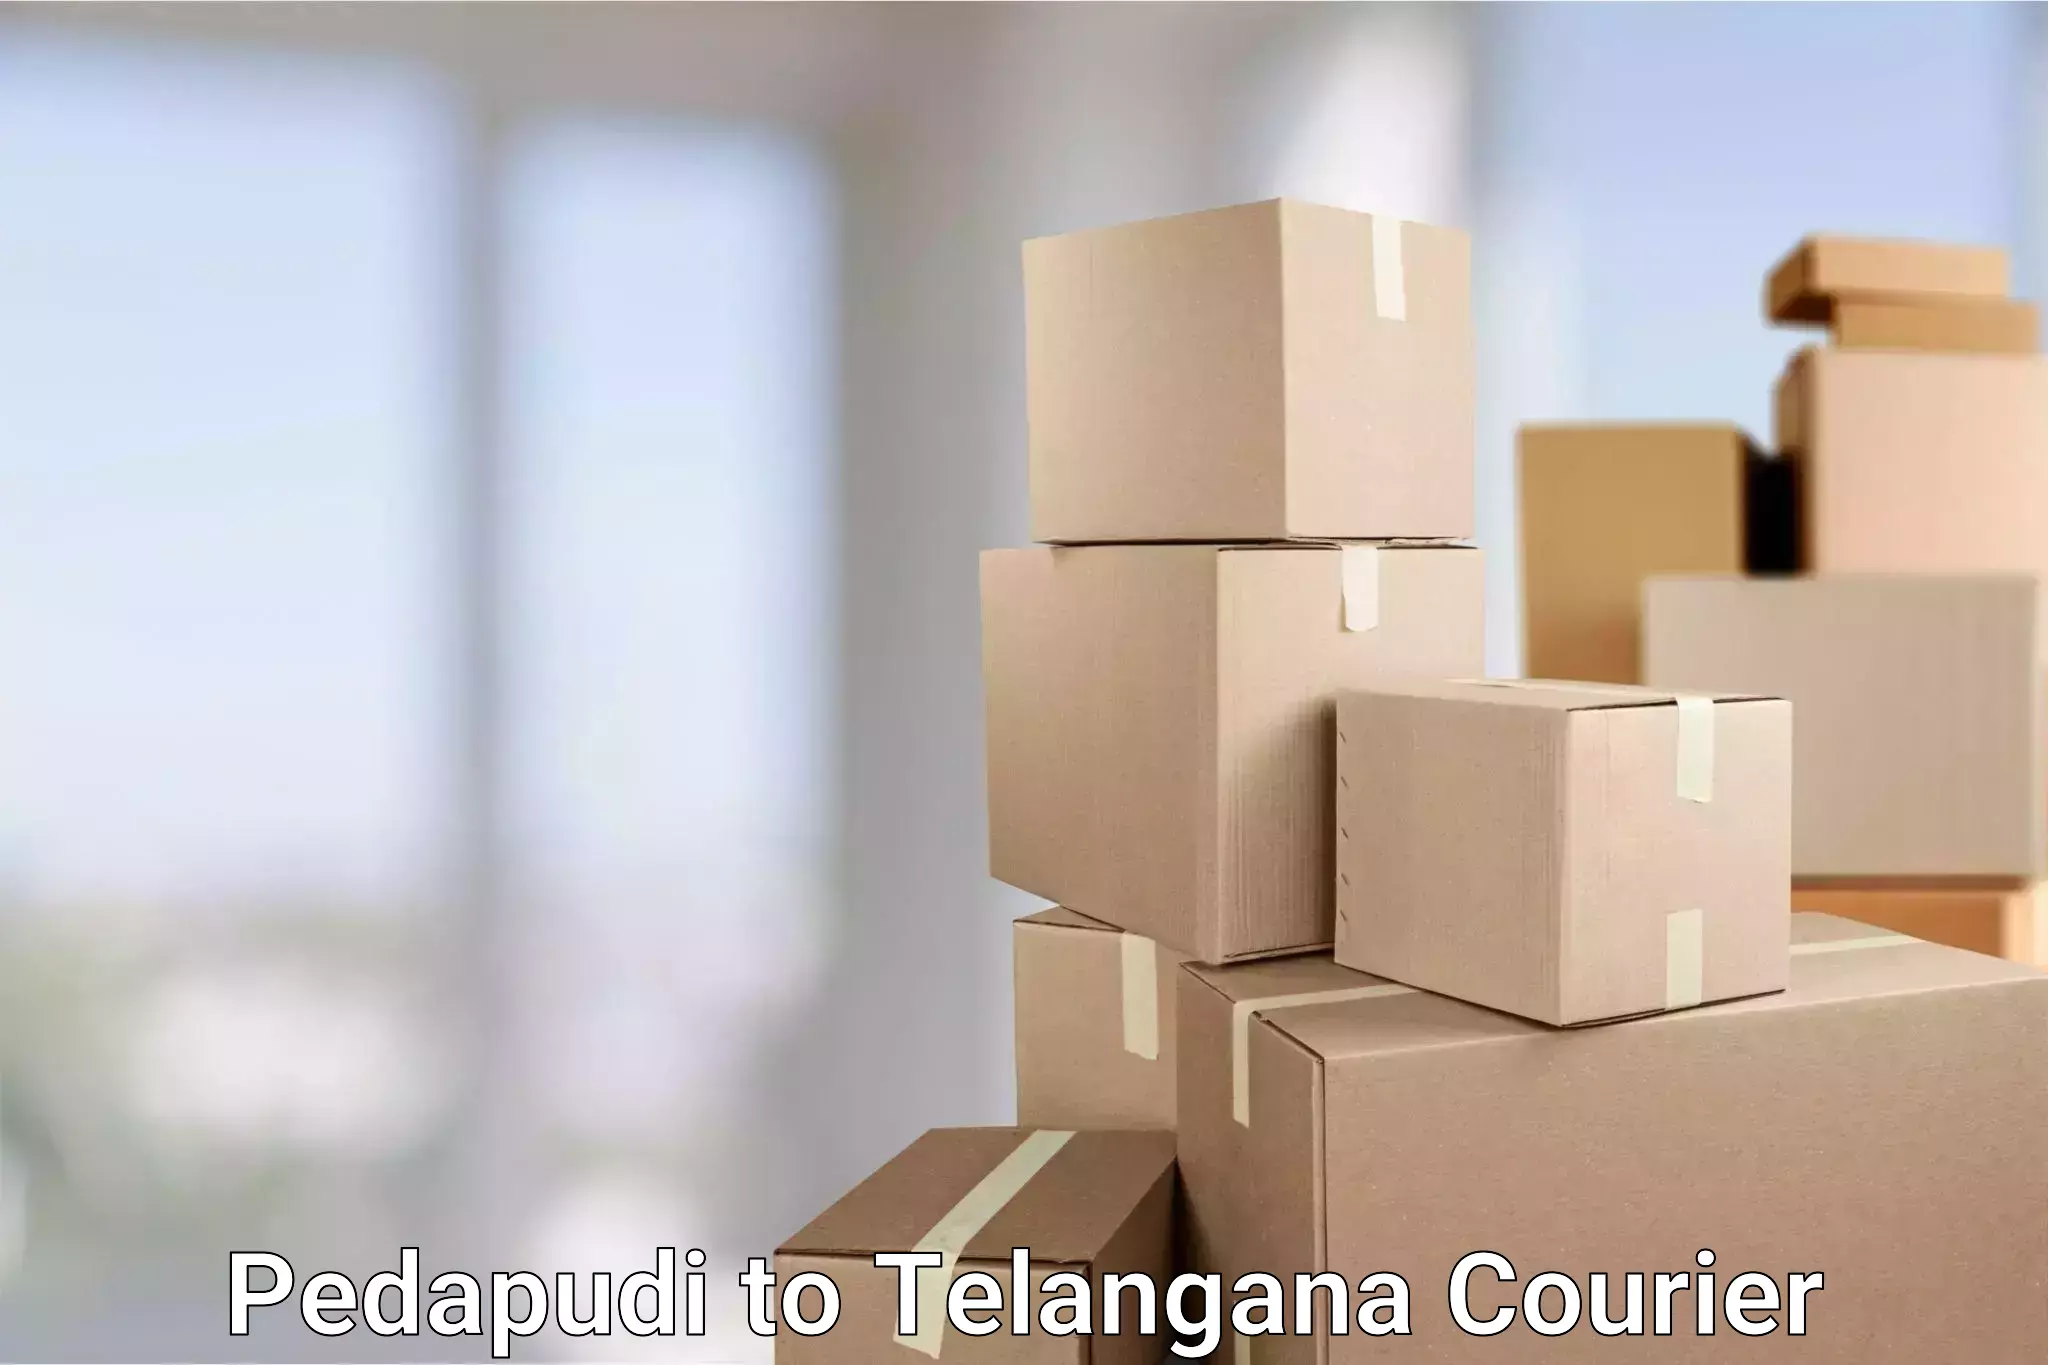 High-performance logistics Pedapudi to Bhongir